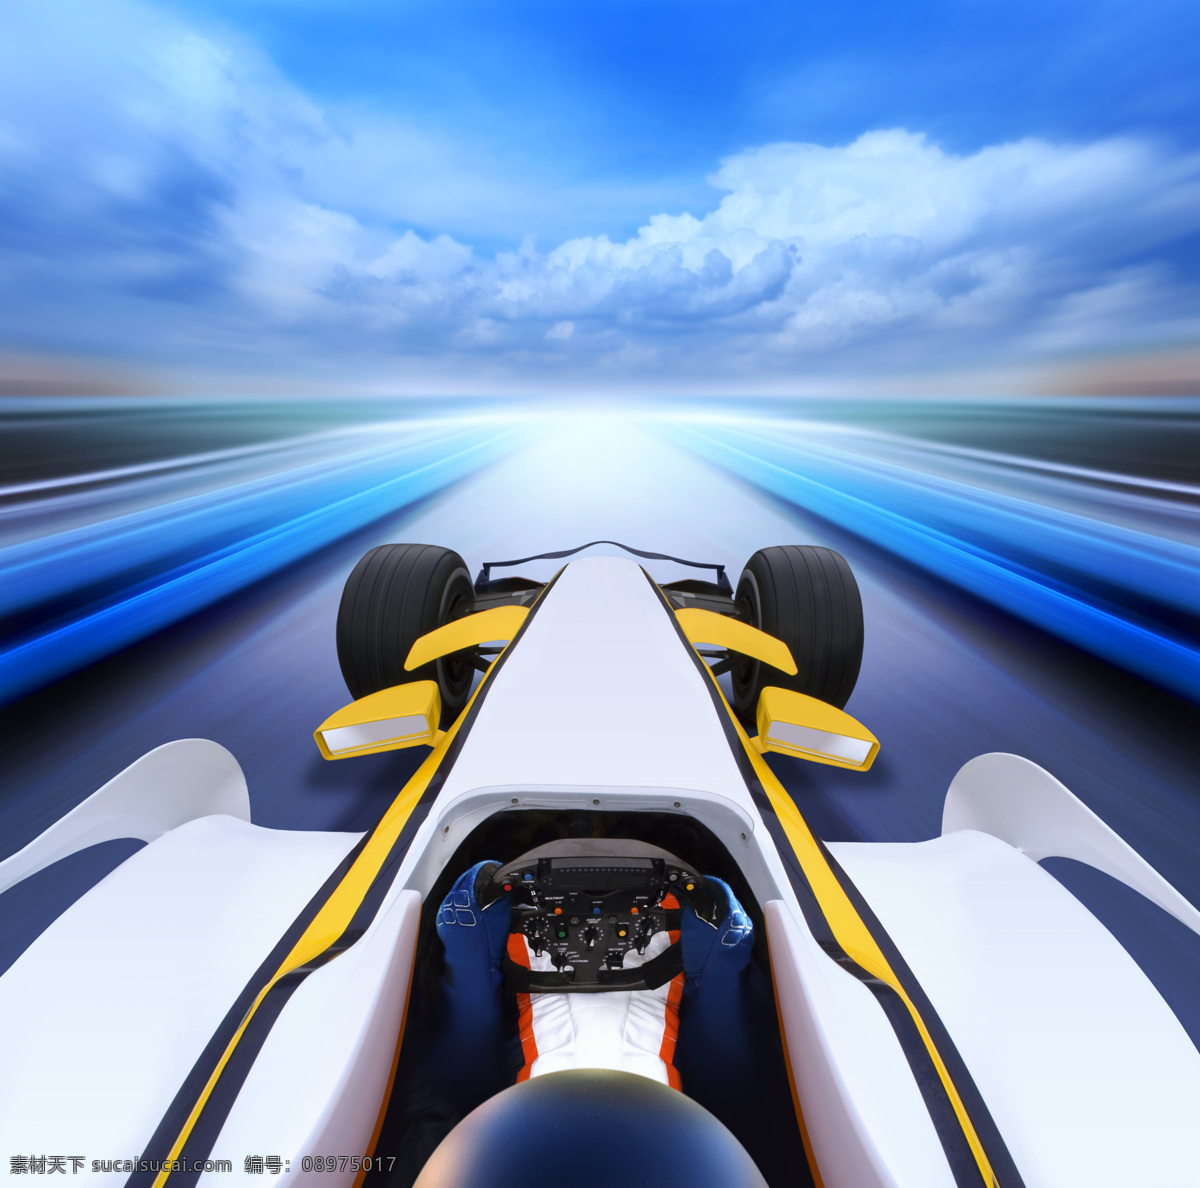 f1 赛车 f1赛车 方程式赛车 快速主题 速度 汽车图片 现代科技